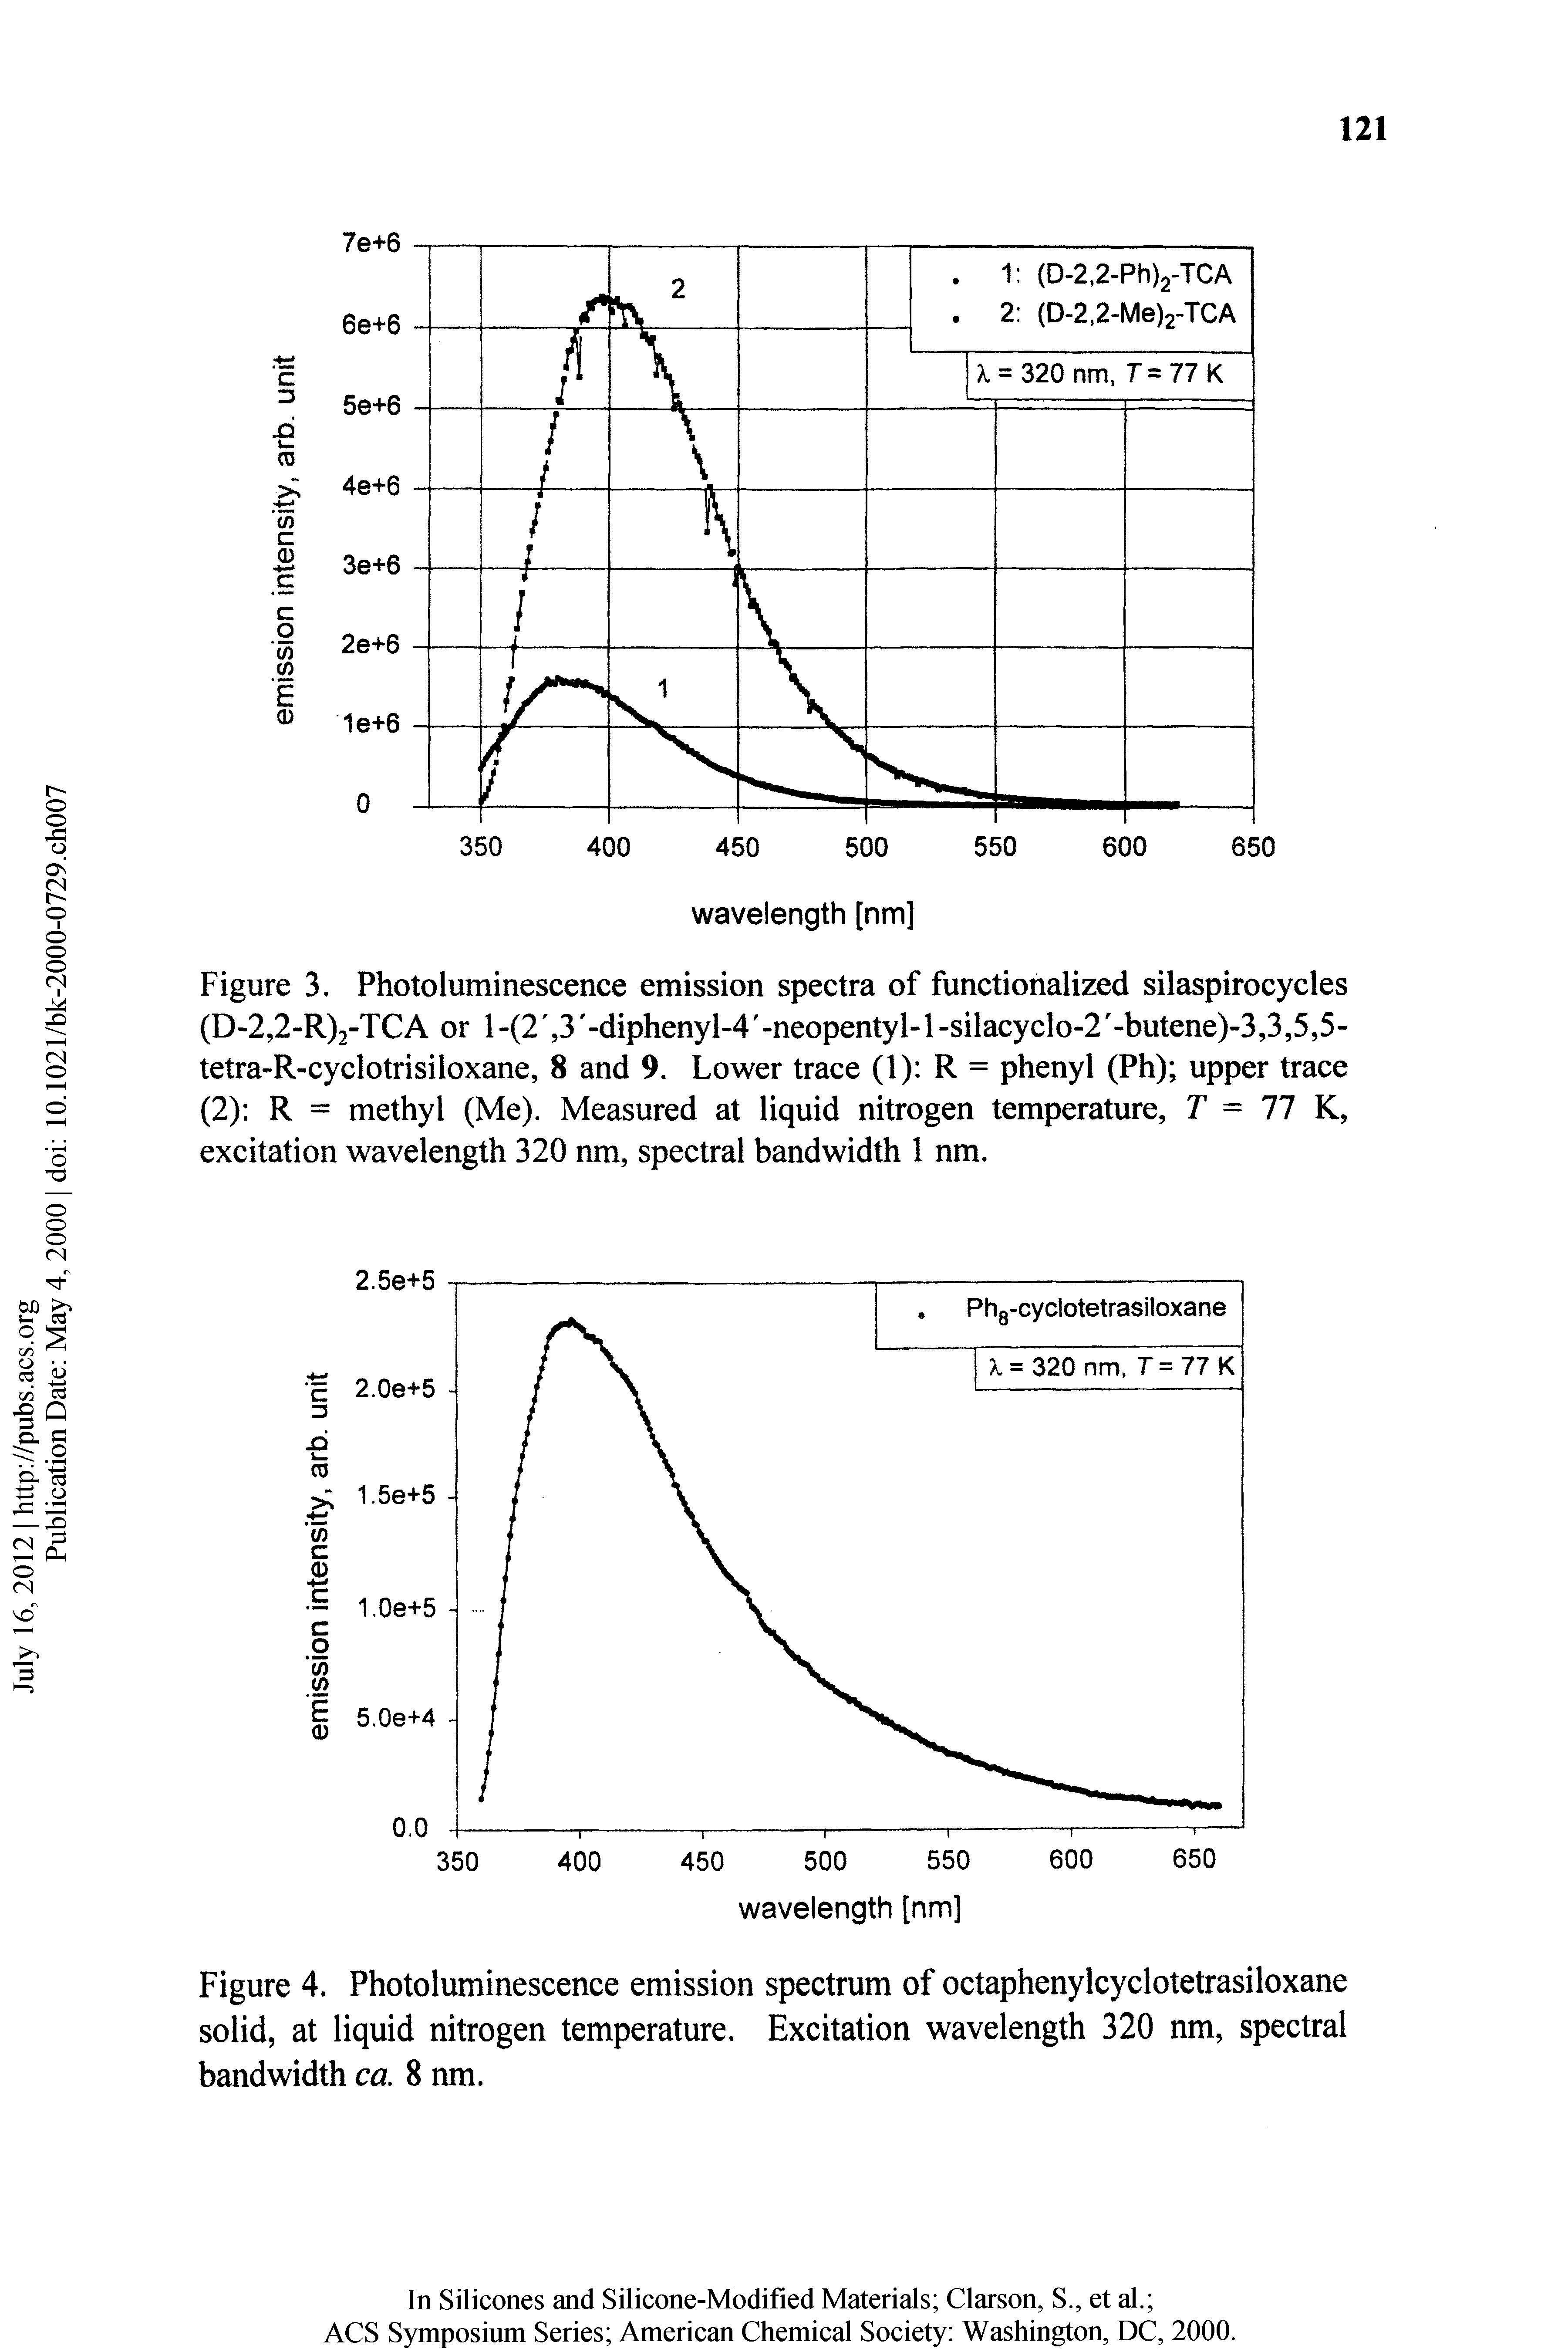 Figure 4. Photoluminescence emission spectrum of octaphenylcyclotetrasiloxane solid, at liquid nitrogen temperature. Excitation wavelength 320 nm, spectral bandwidth ca. 8 nm.